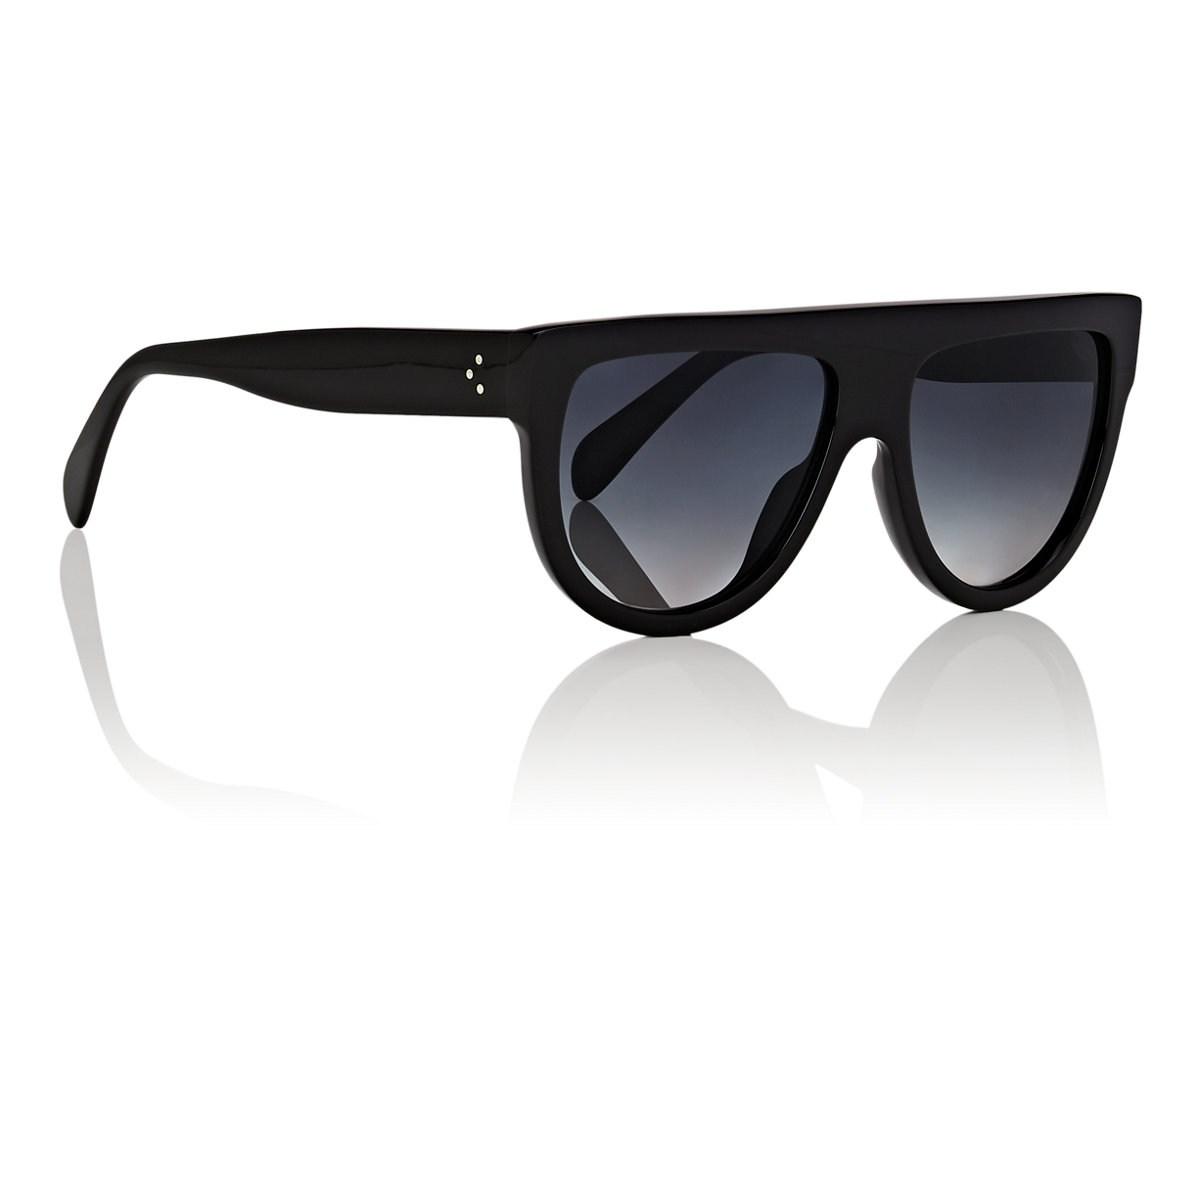 Céline Aviator Sunglasses in Black - Lyst